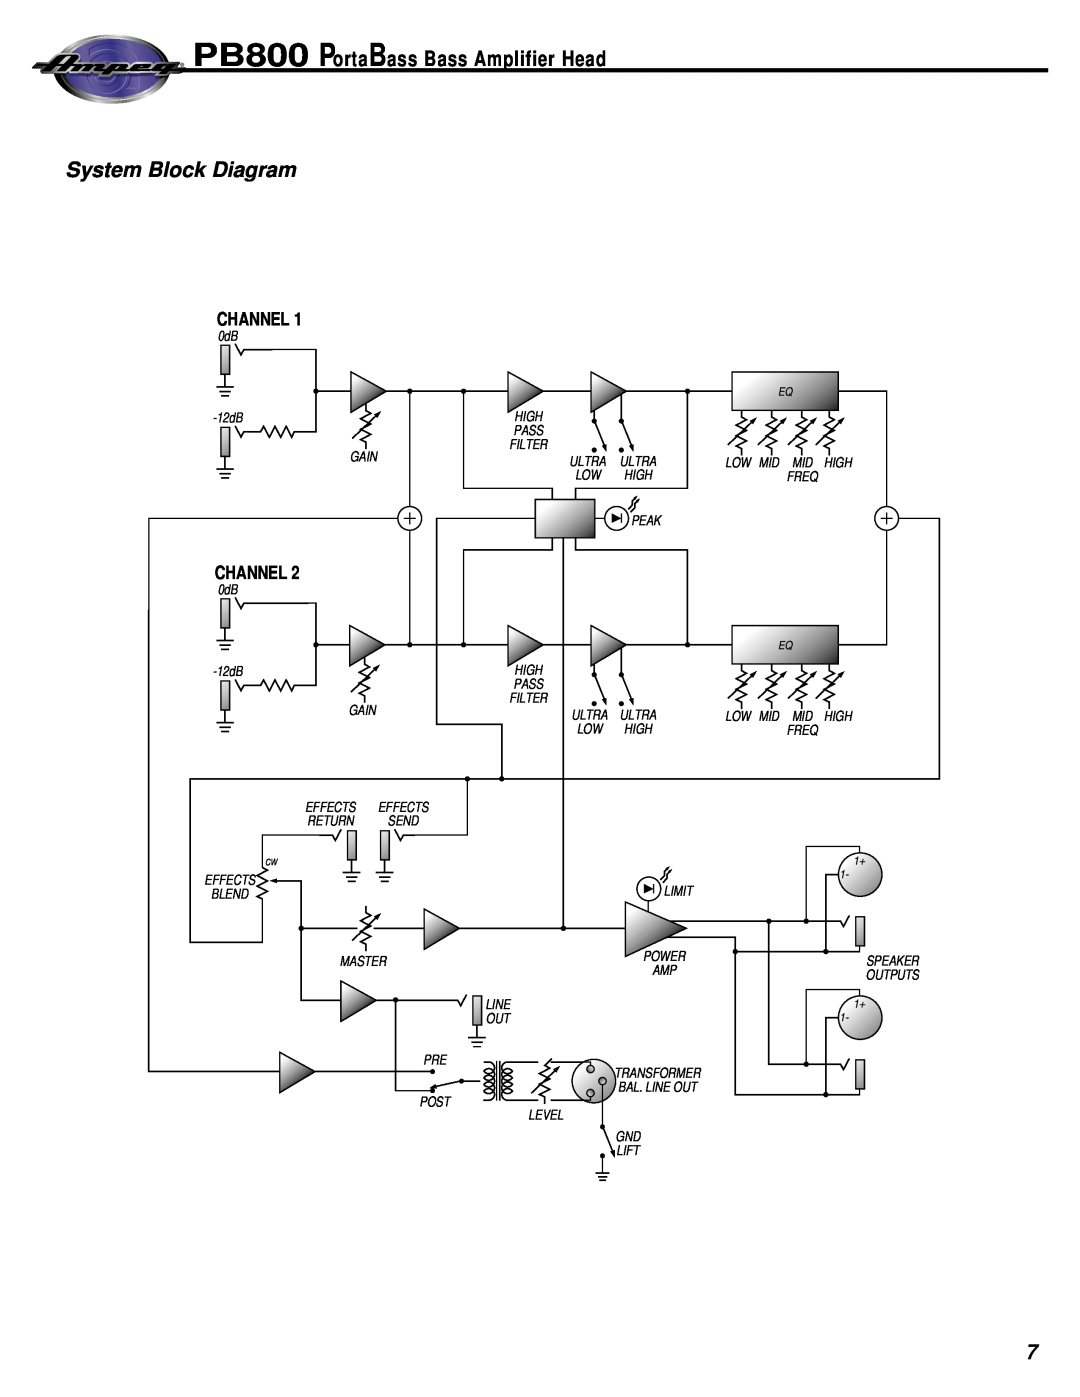 Ampeg PortaBass800 manual System Block Diagram, PB800 PortaBass Bass Amplifier Head, Channel 